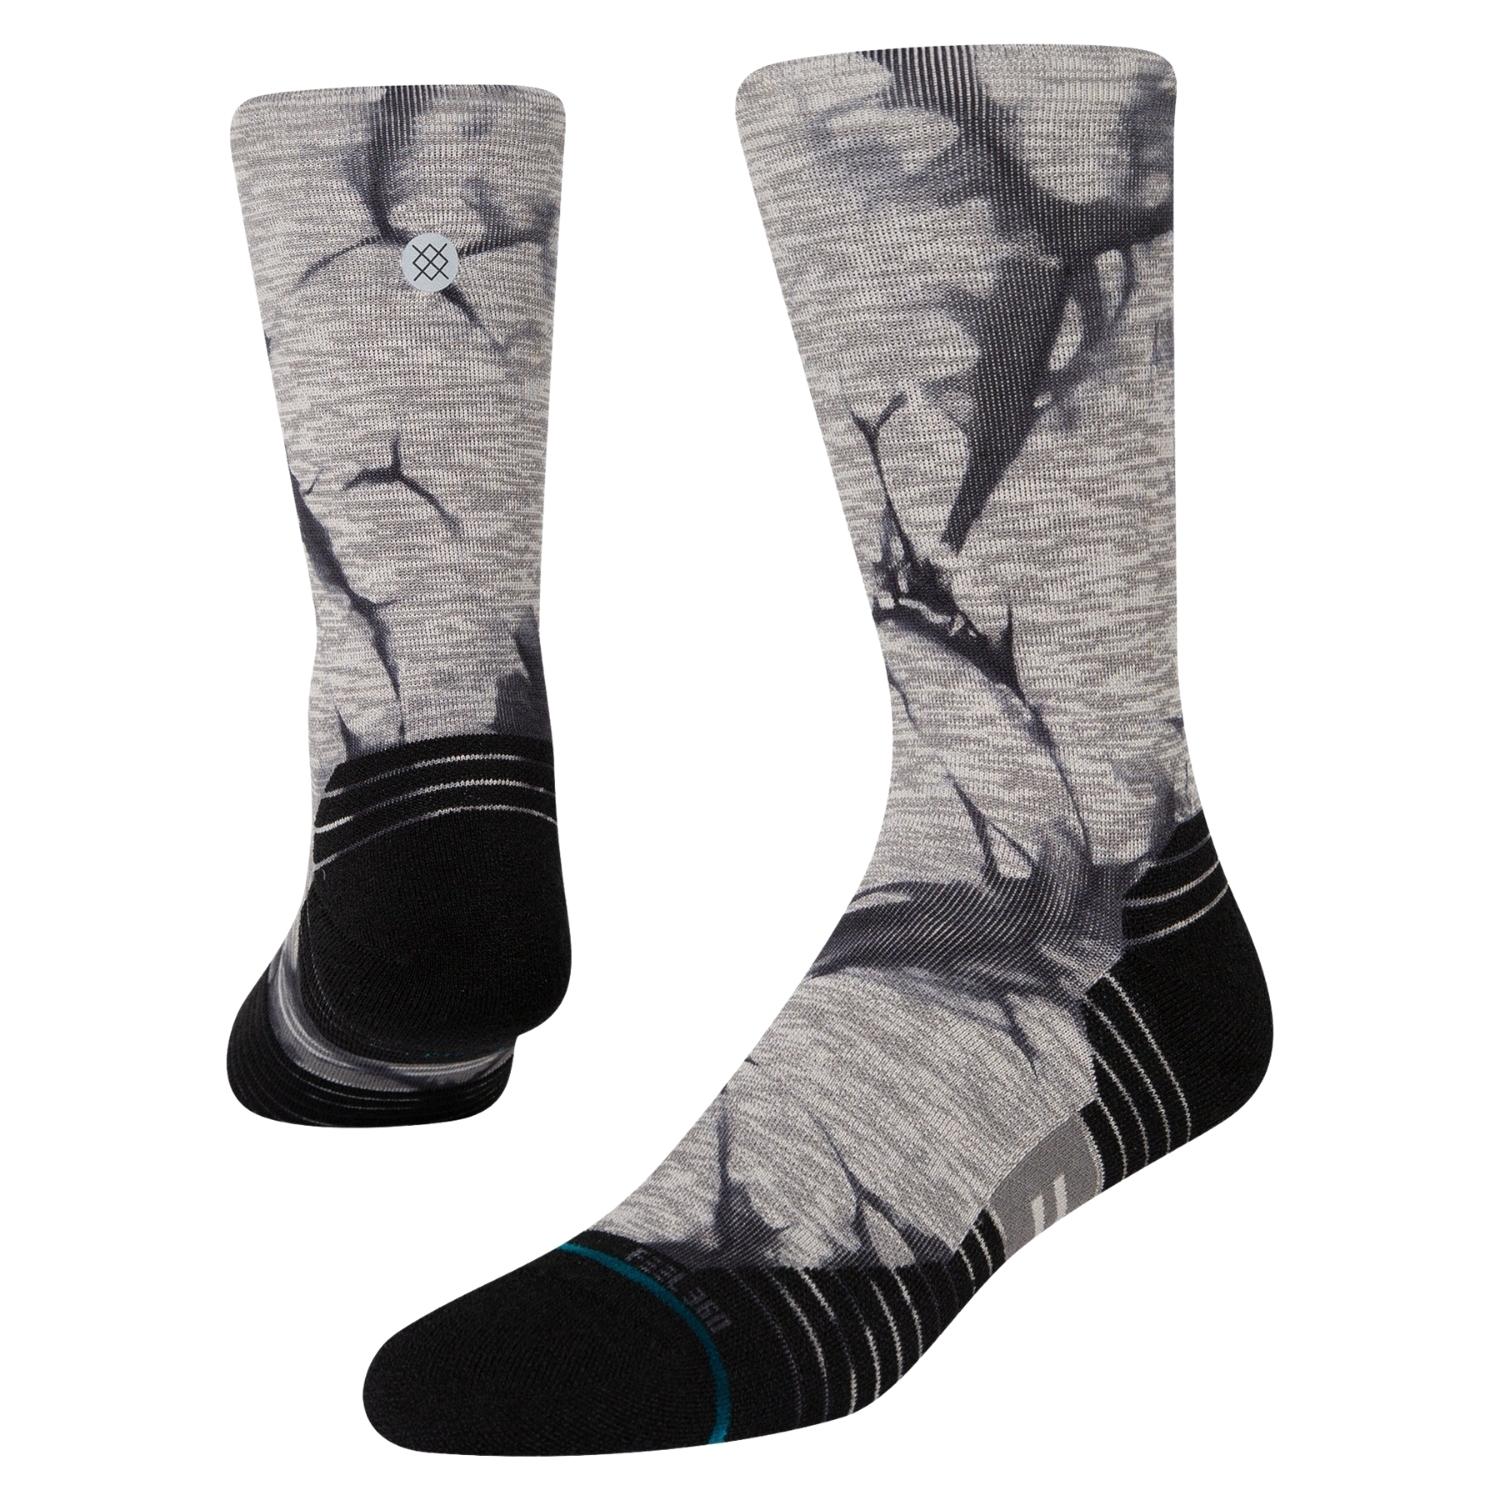 Stance Dissipate Performance Socks - Grey - Mens Running/Training Socks by Stance